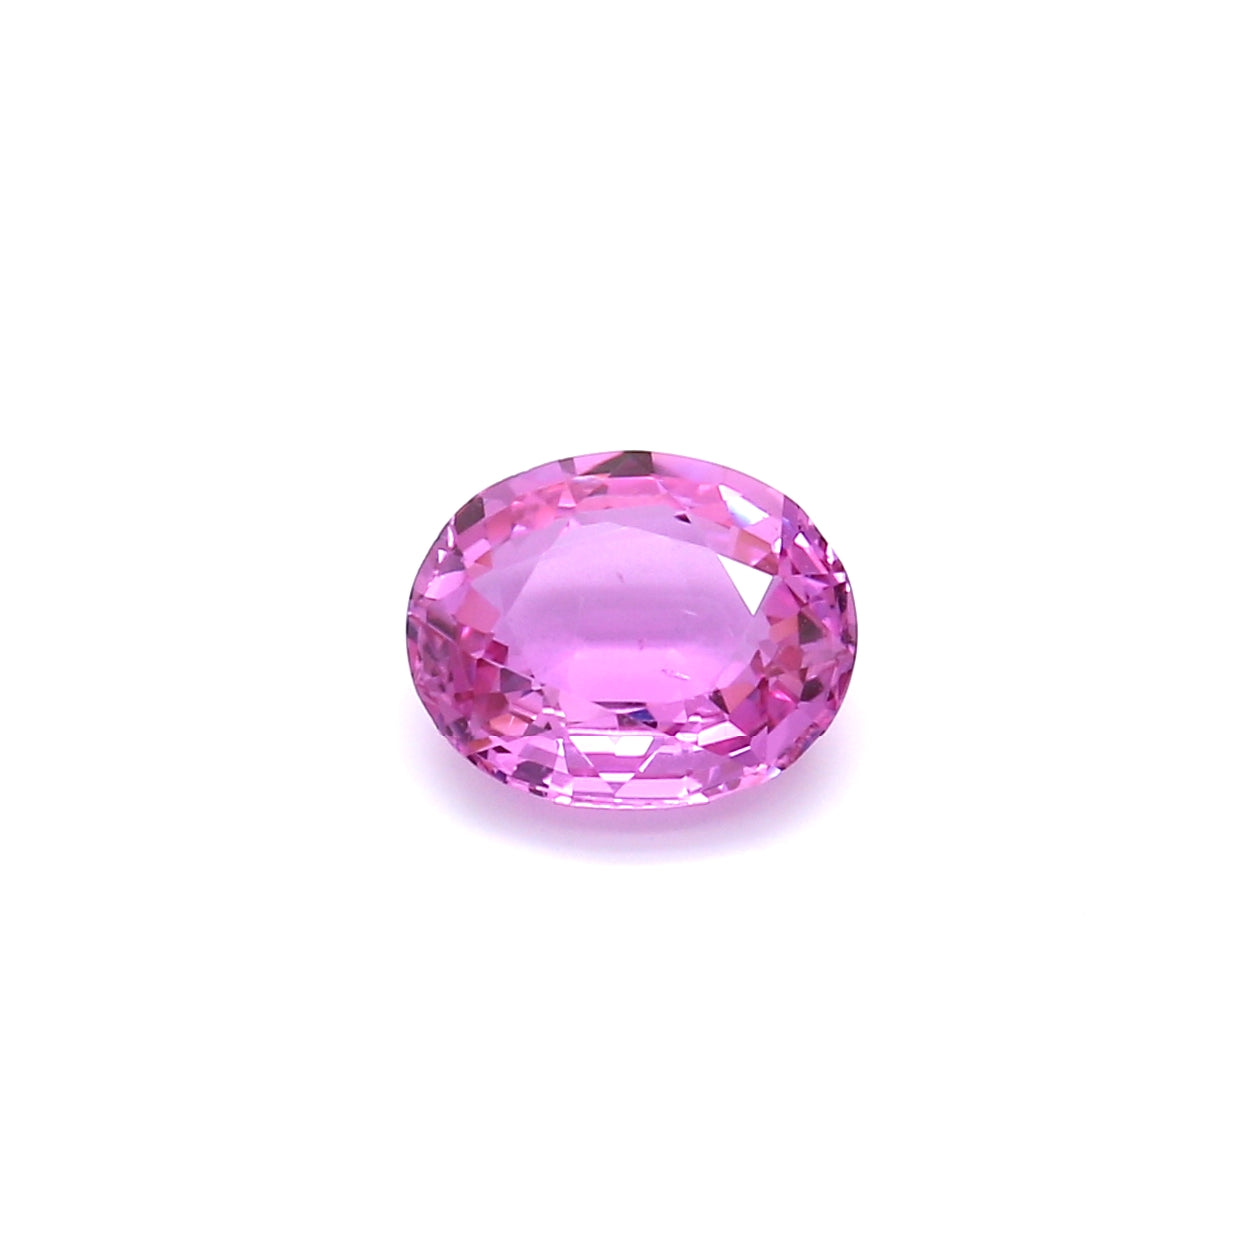 1.61ct Pink, Oval Sapphire, Heated, Madagascar - 7.93 x 6.60 x 3.35mm